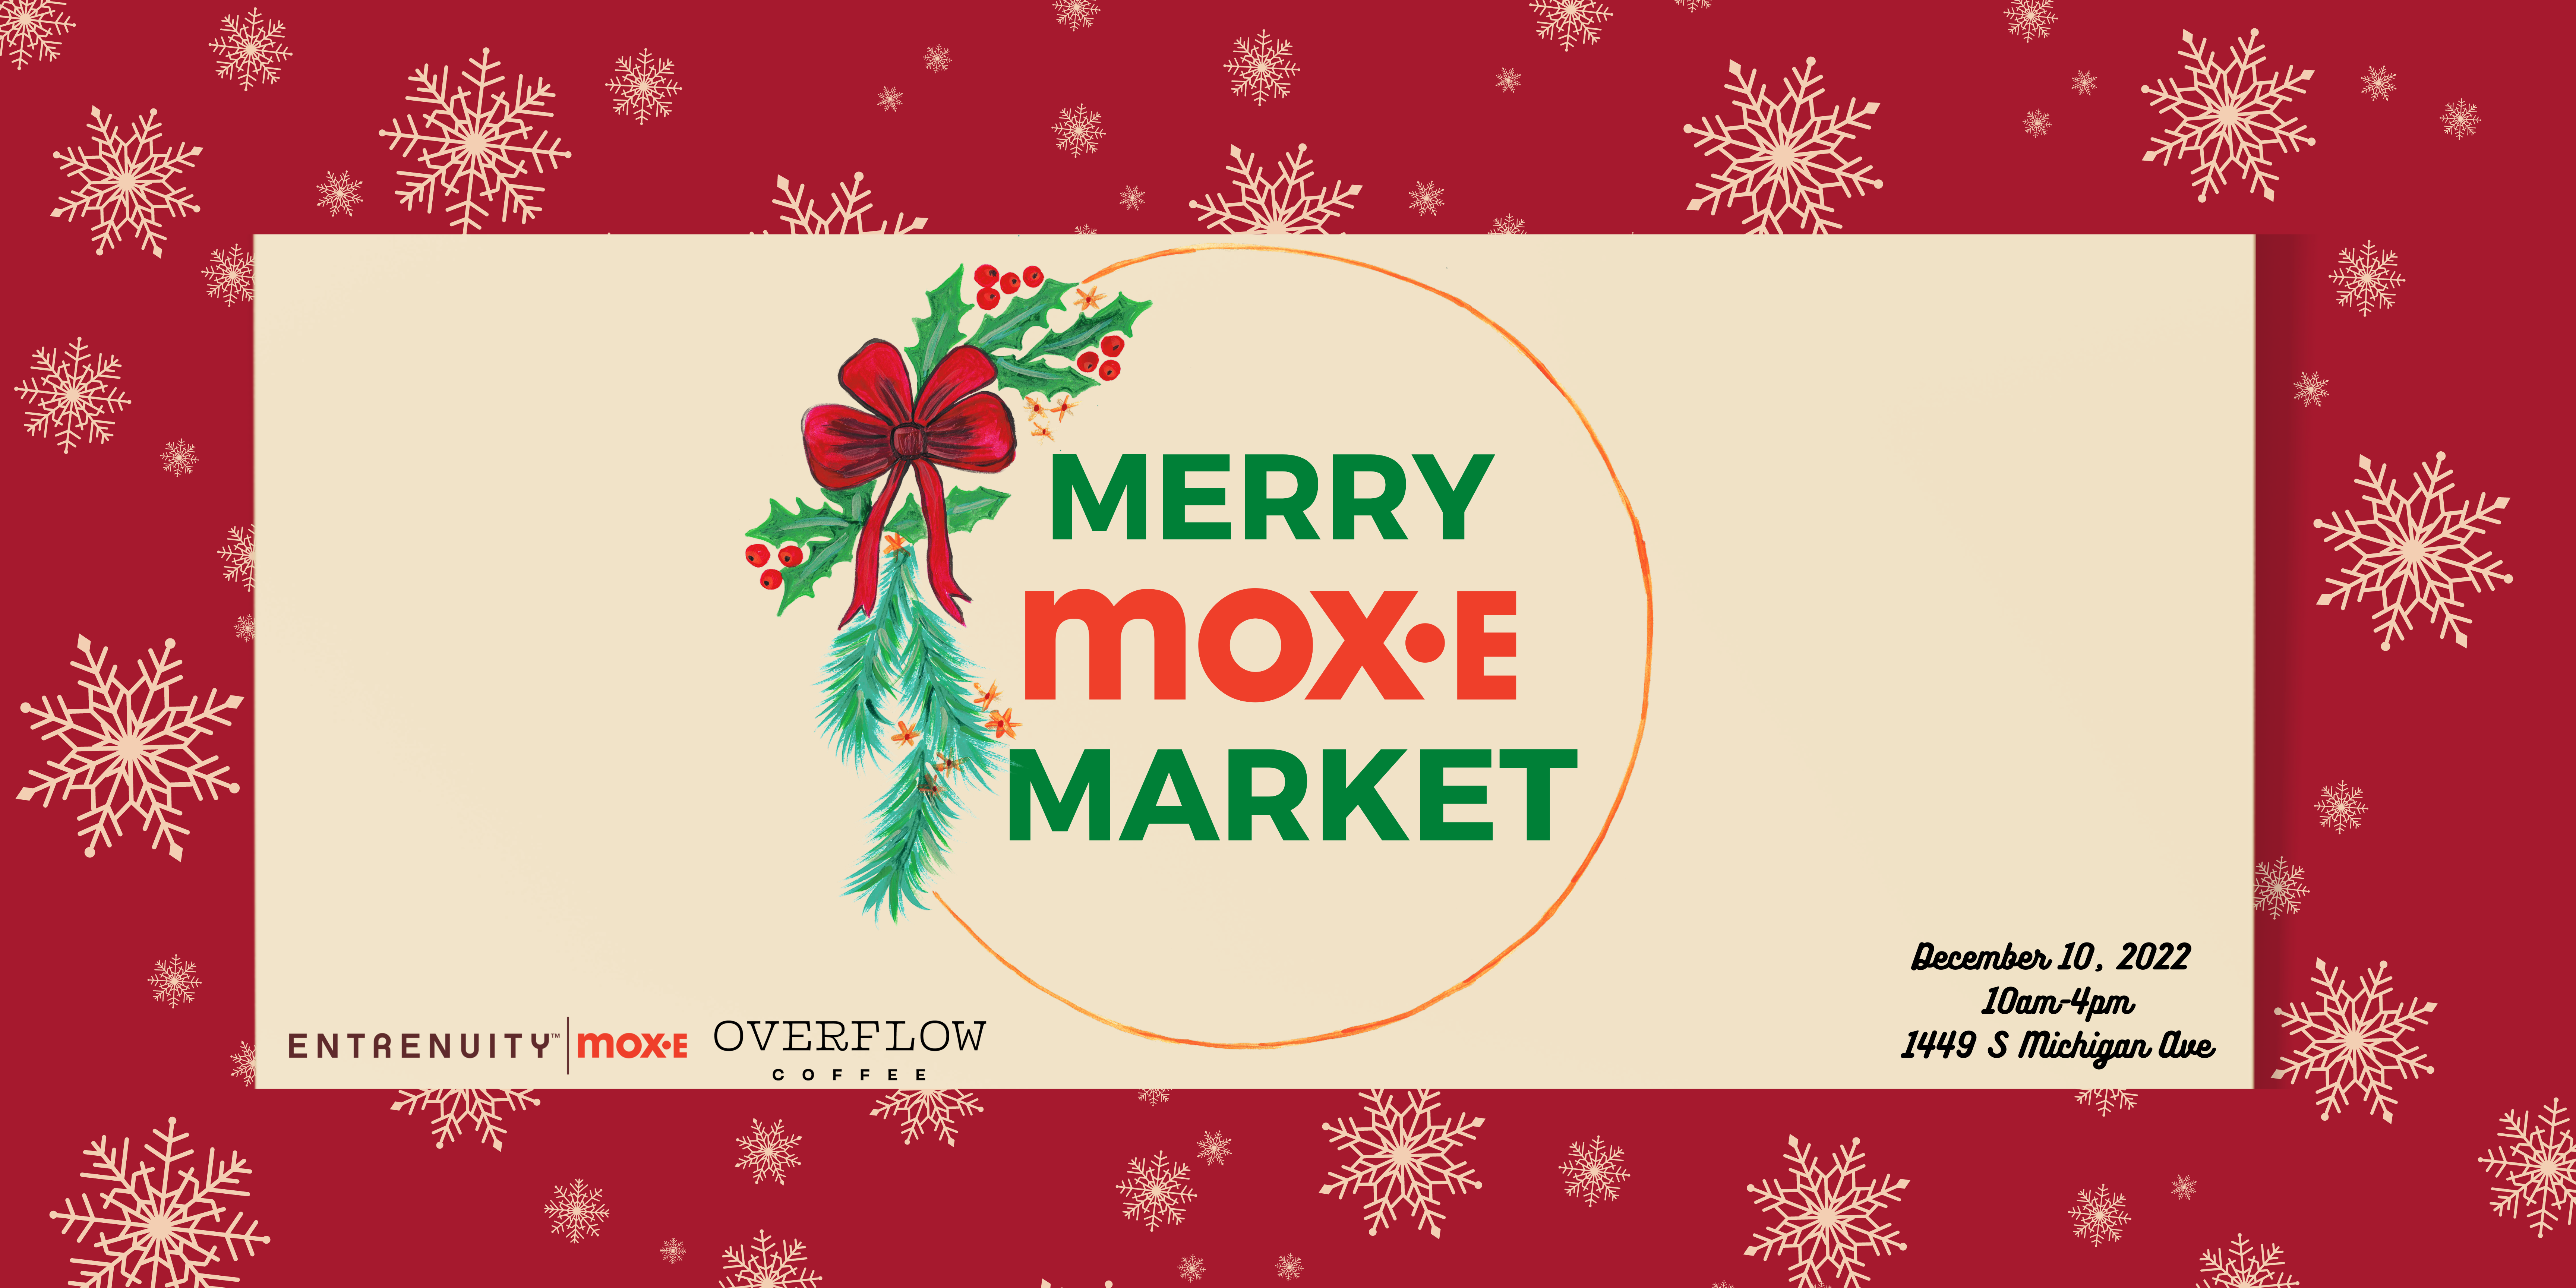 Eventbrite Merry Moxe Market Template